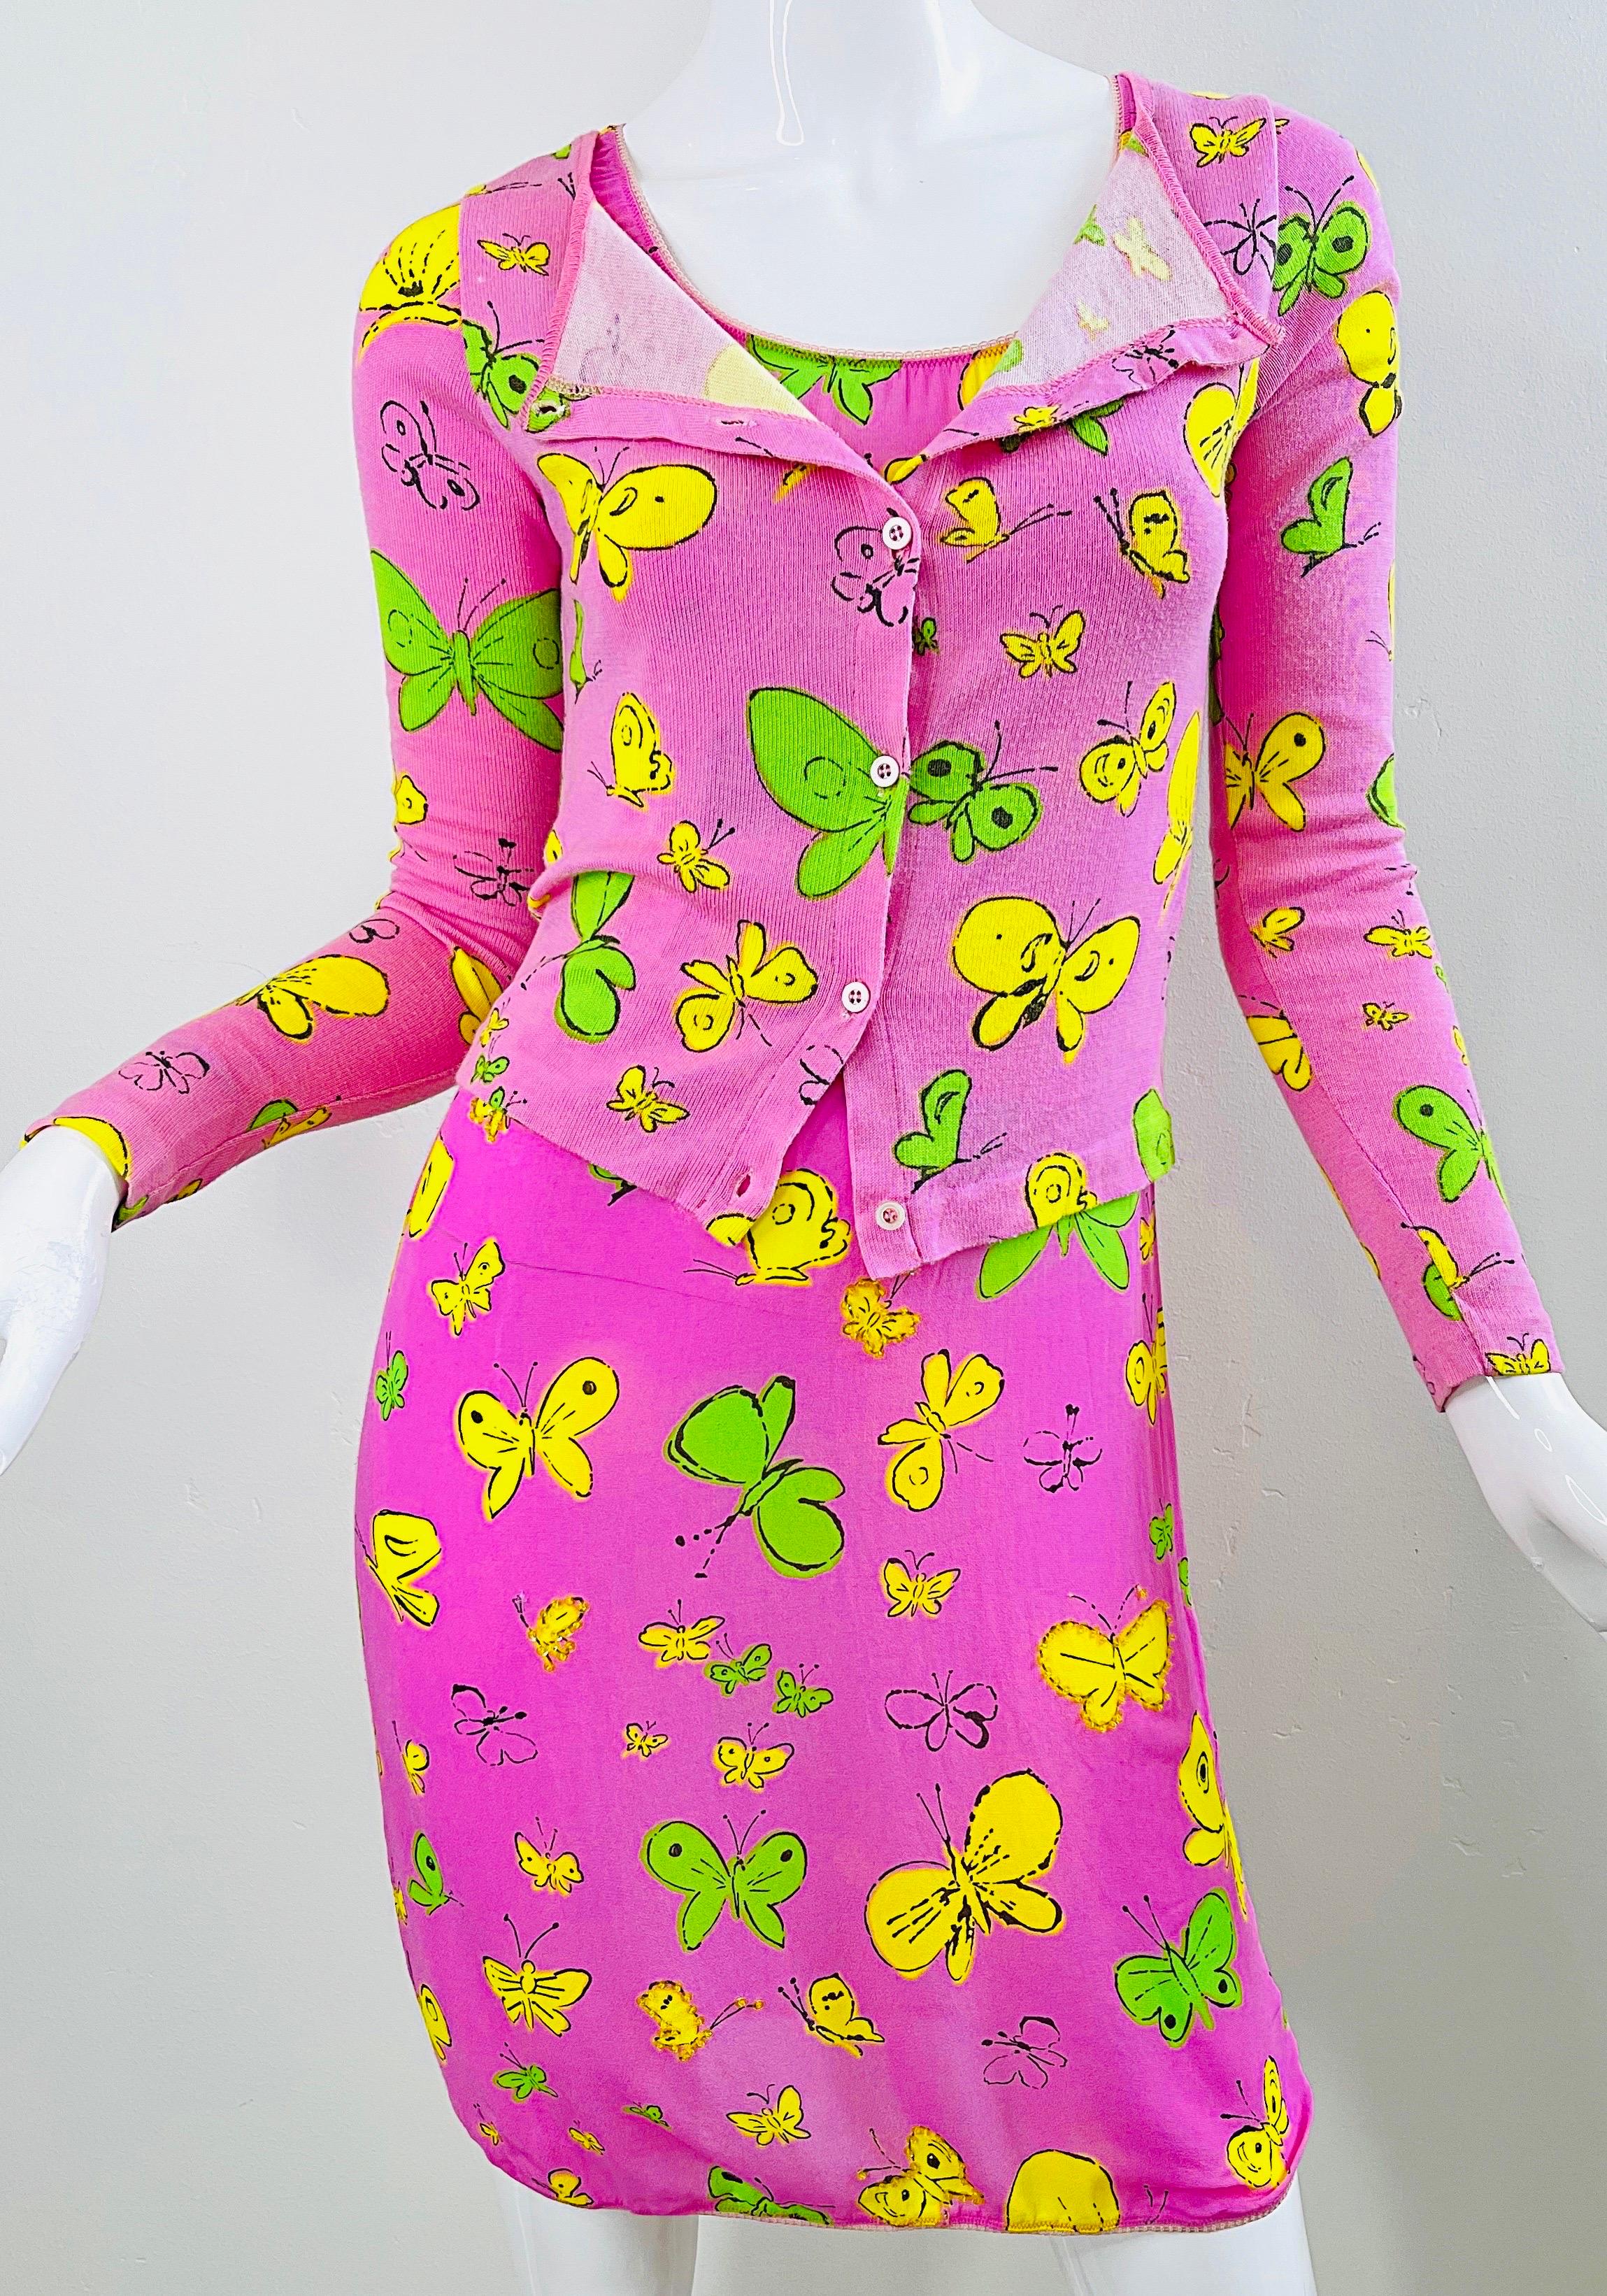 BARBIE 1990s Versus Gianni Versace Bubblegum Pink Beads Butterfly Dress Cardigan For Sale 11